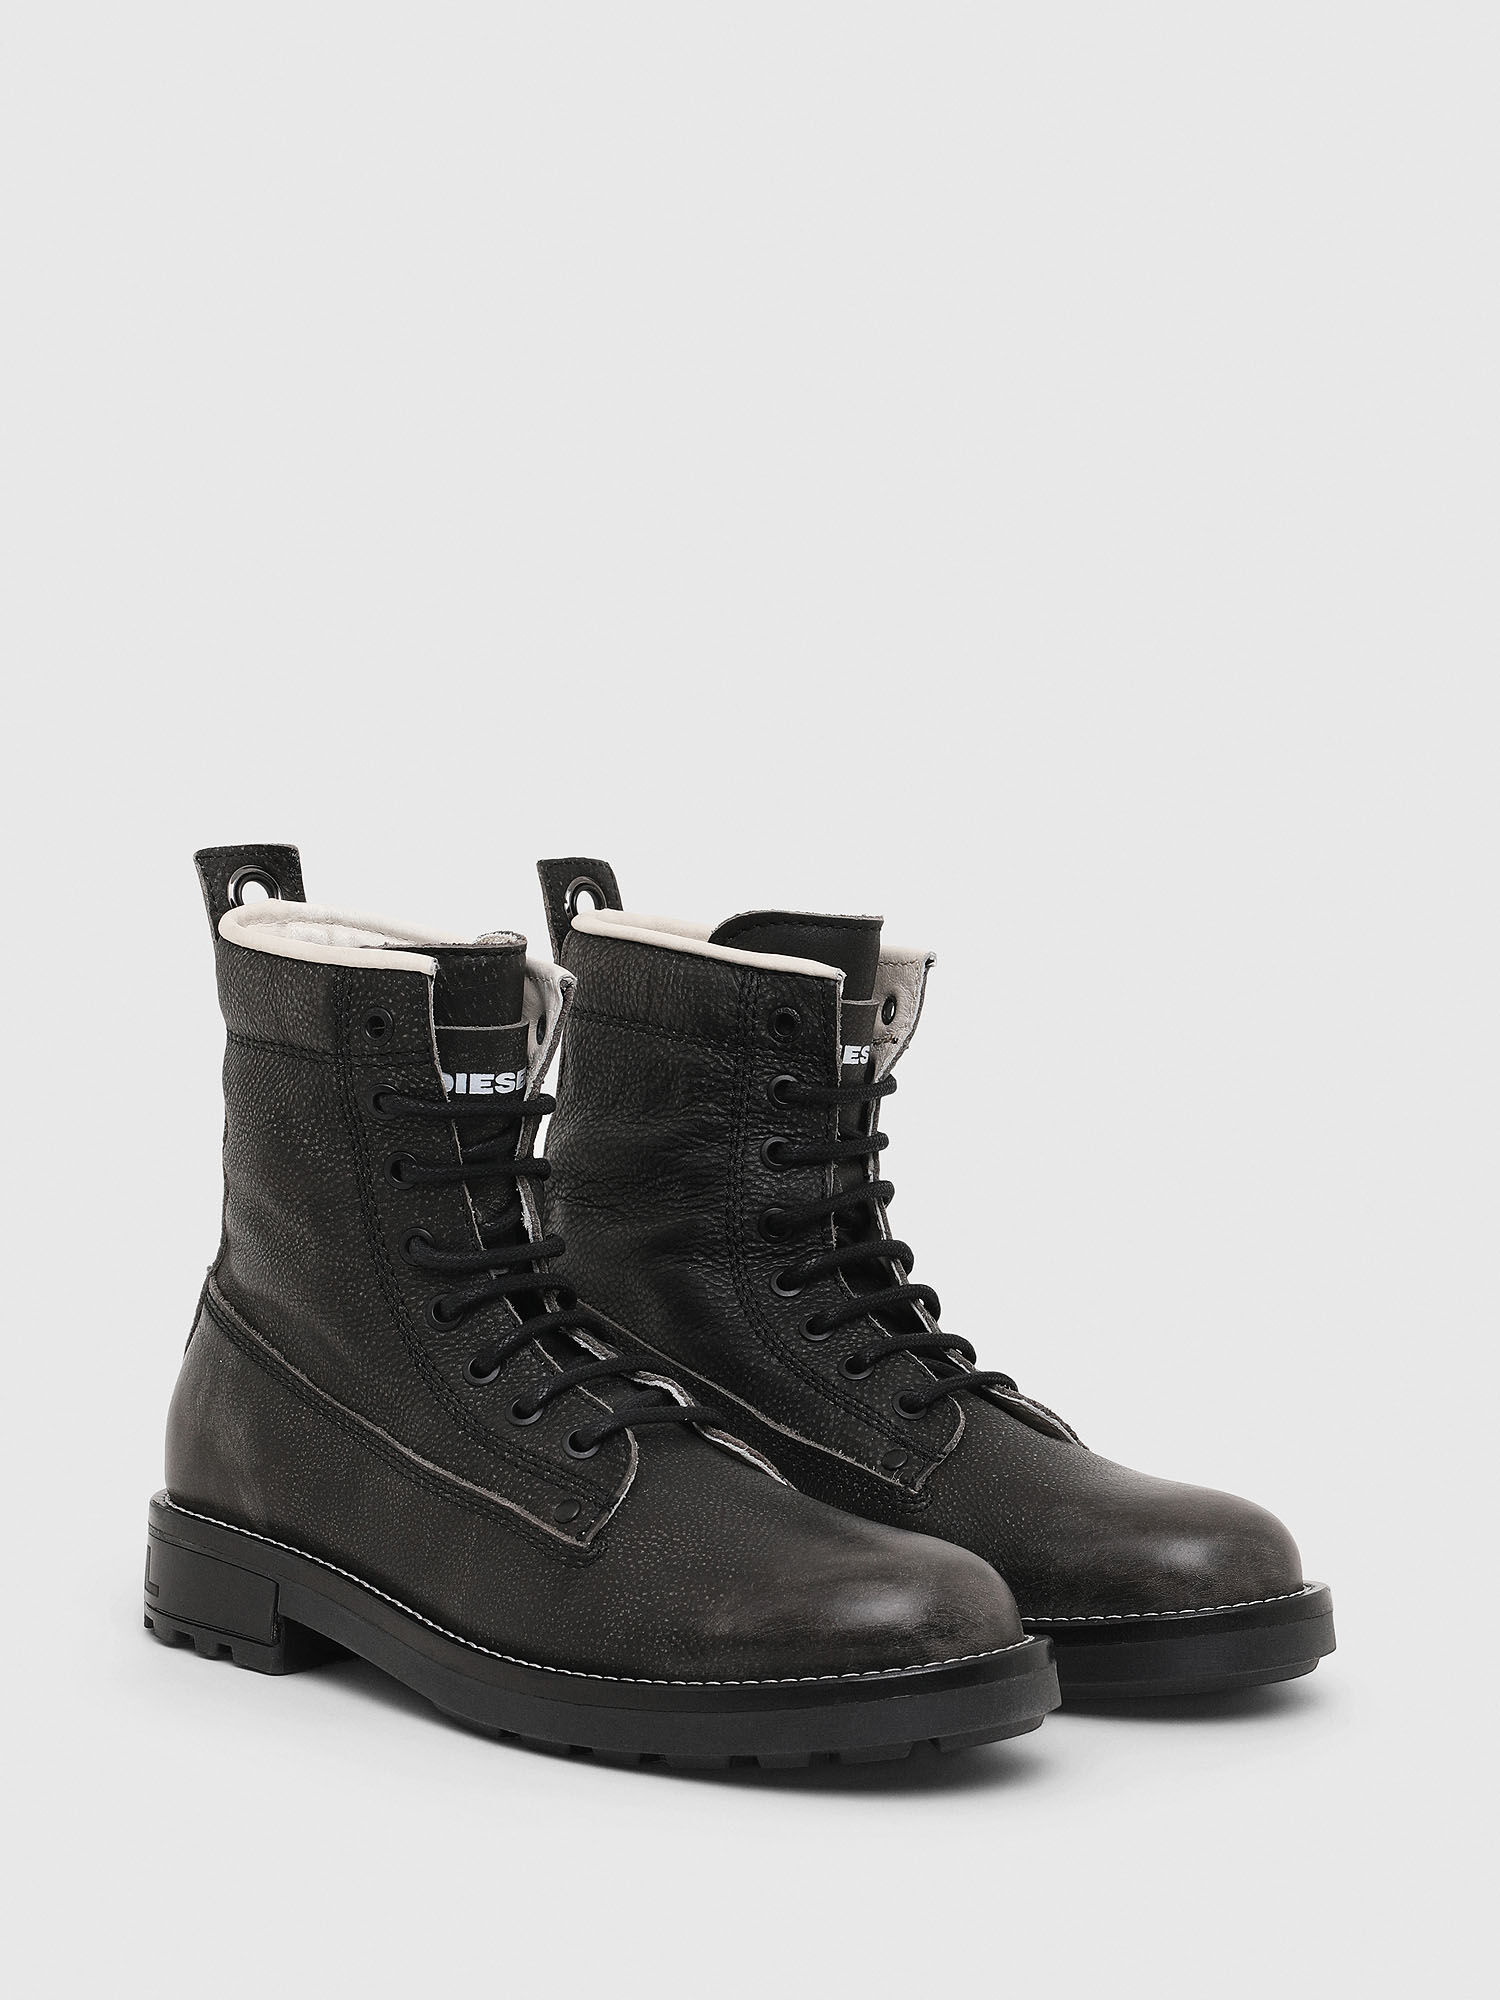 dark grey ankle boots uk